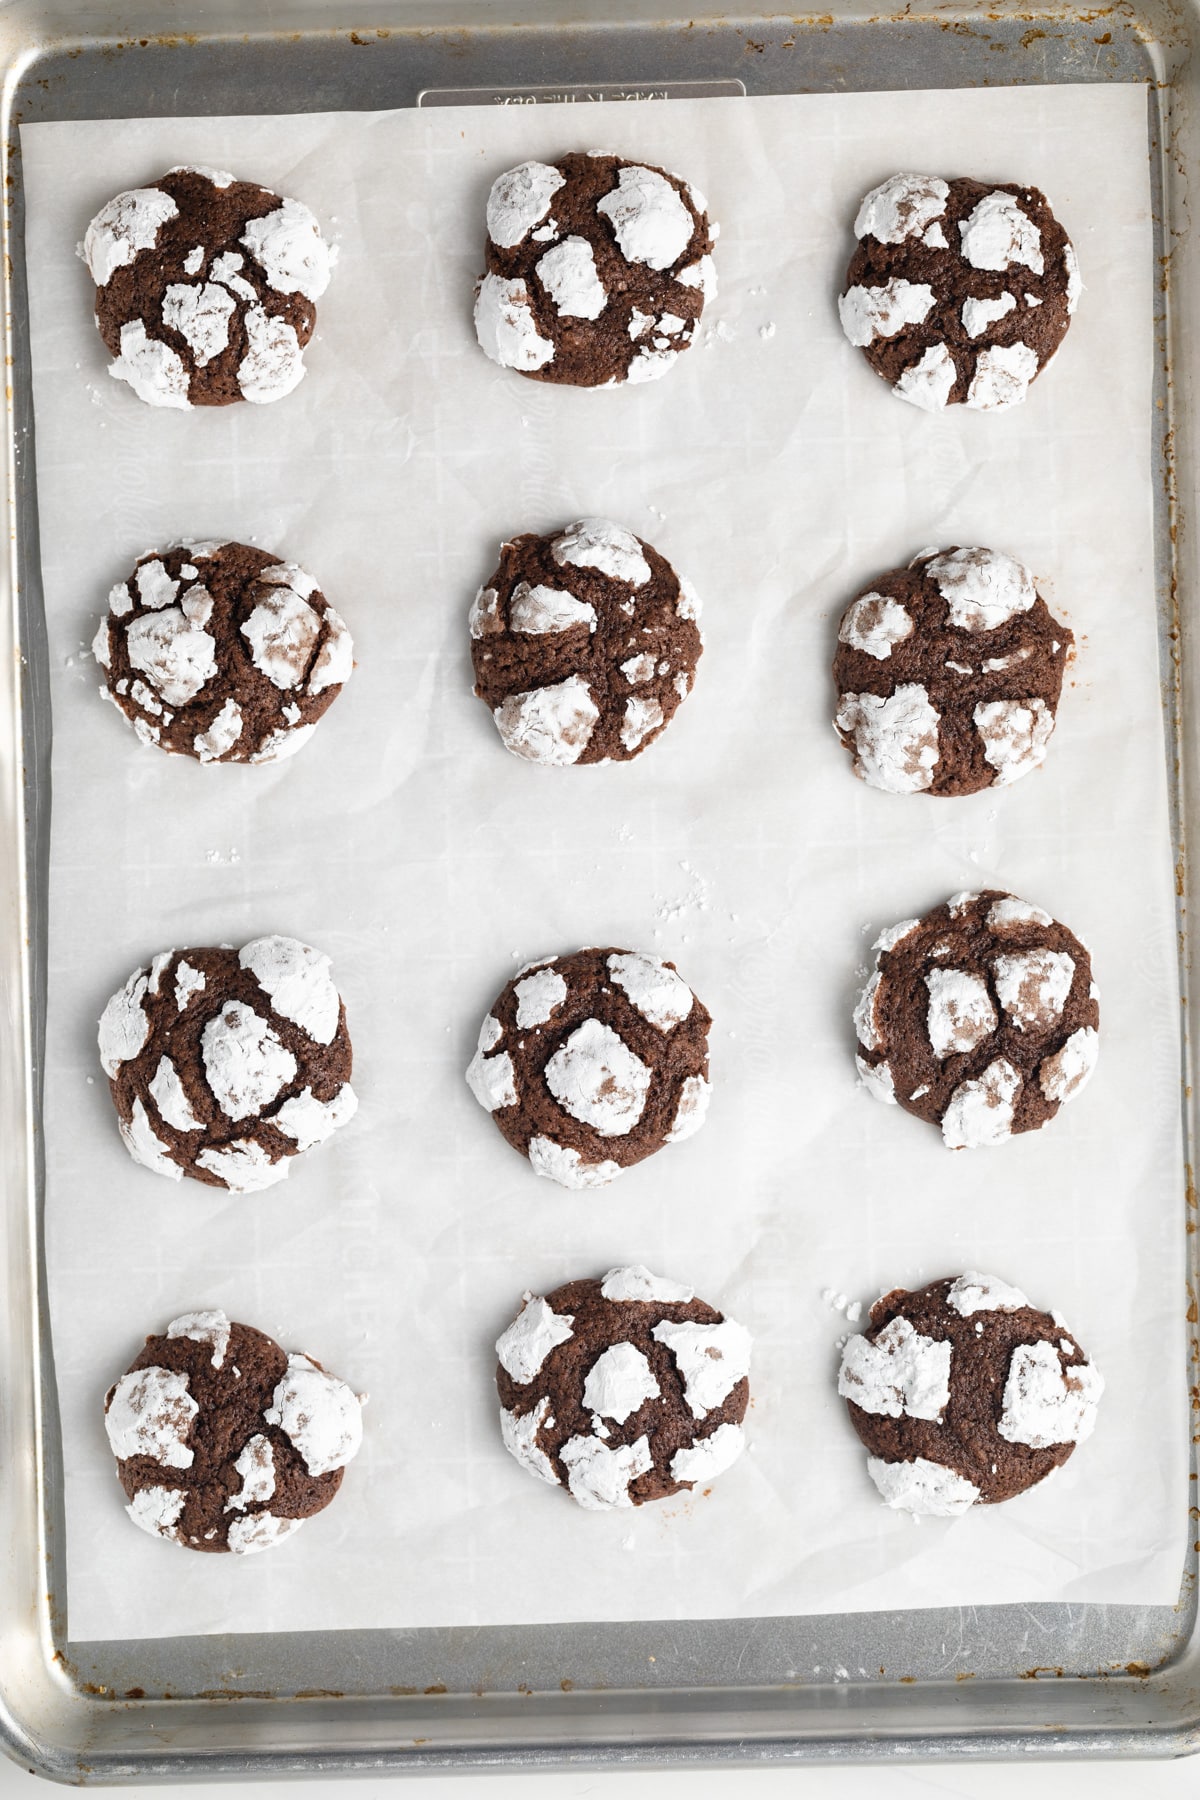 Overhead of chocolate crinkle cookies on baking sheet.